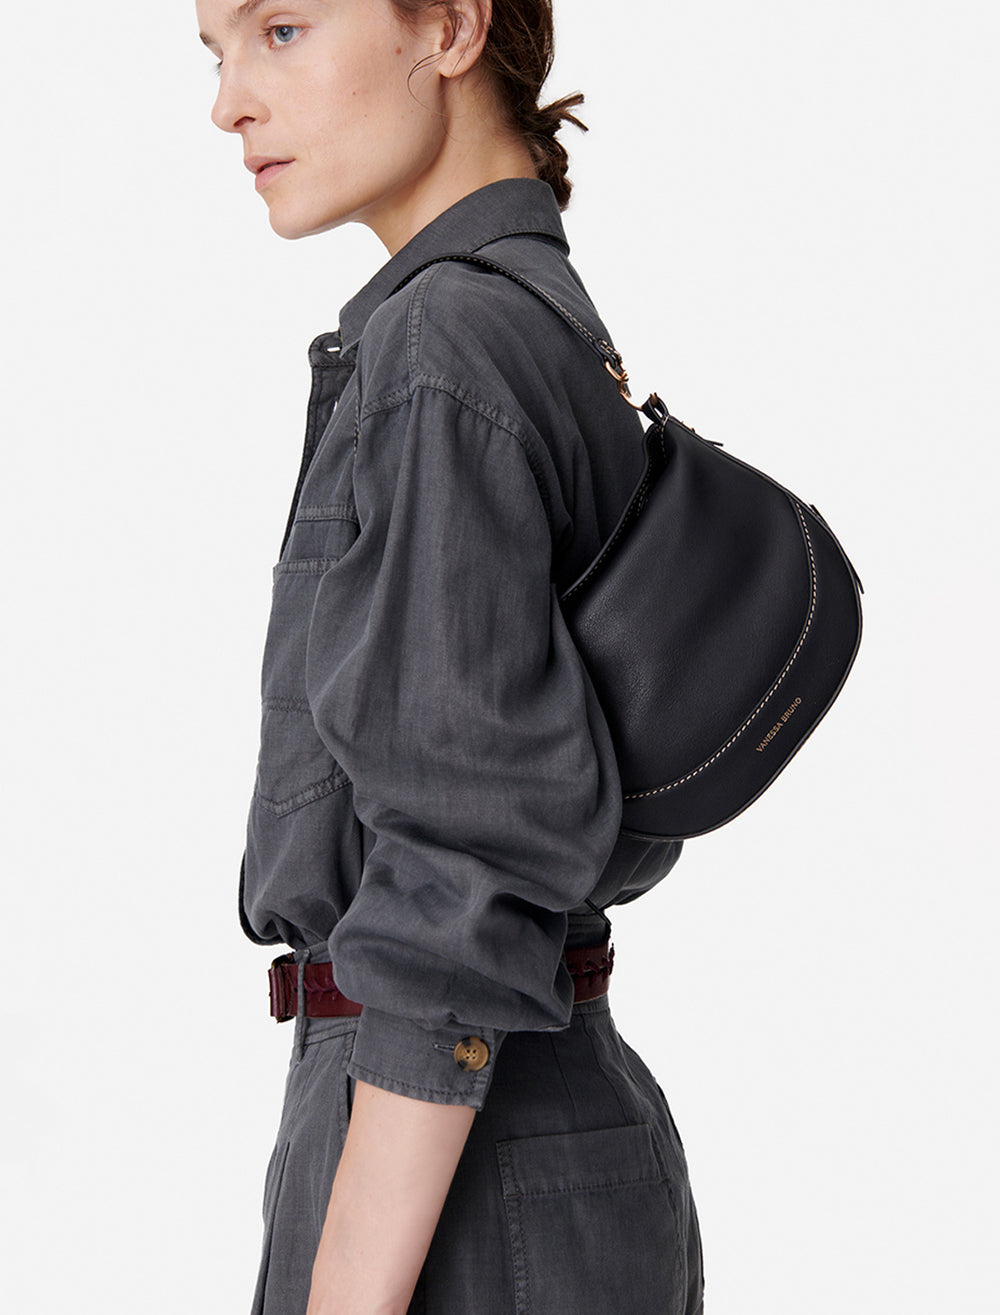 Model holding Vanessa Bruno's mini daily bag in noir.